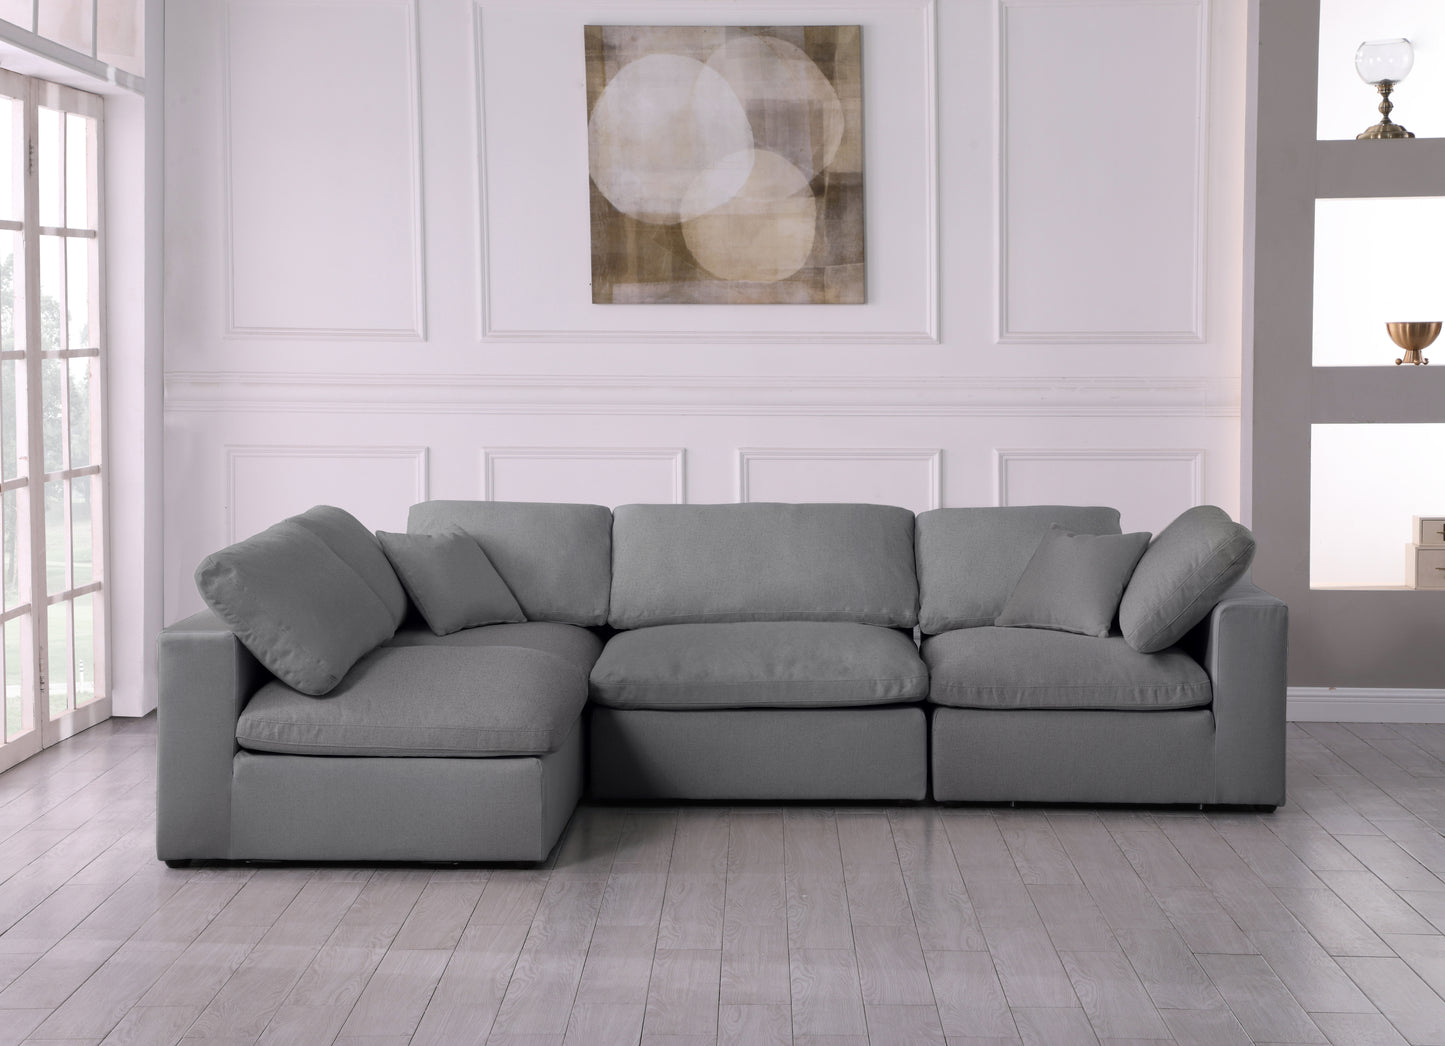 damian grey linen textured fabric deluxe comfort modular sectional sec4b